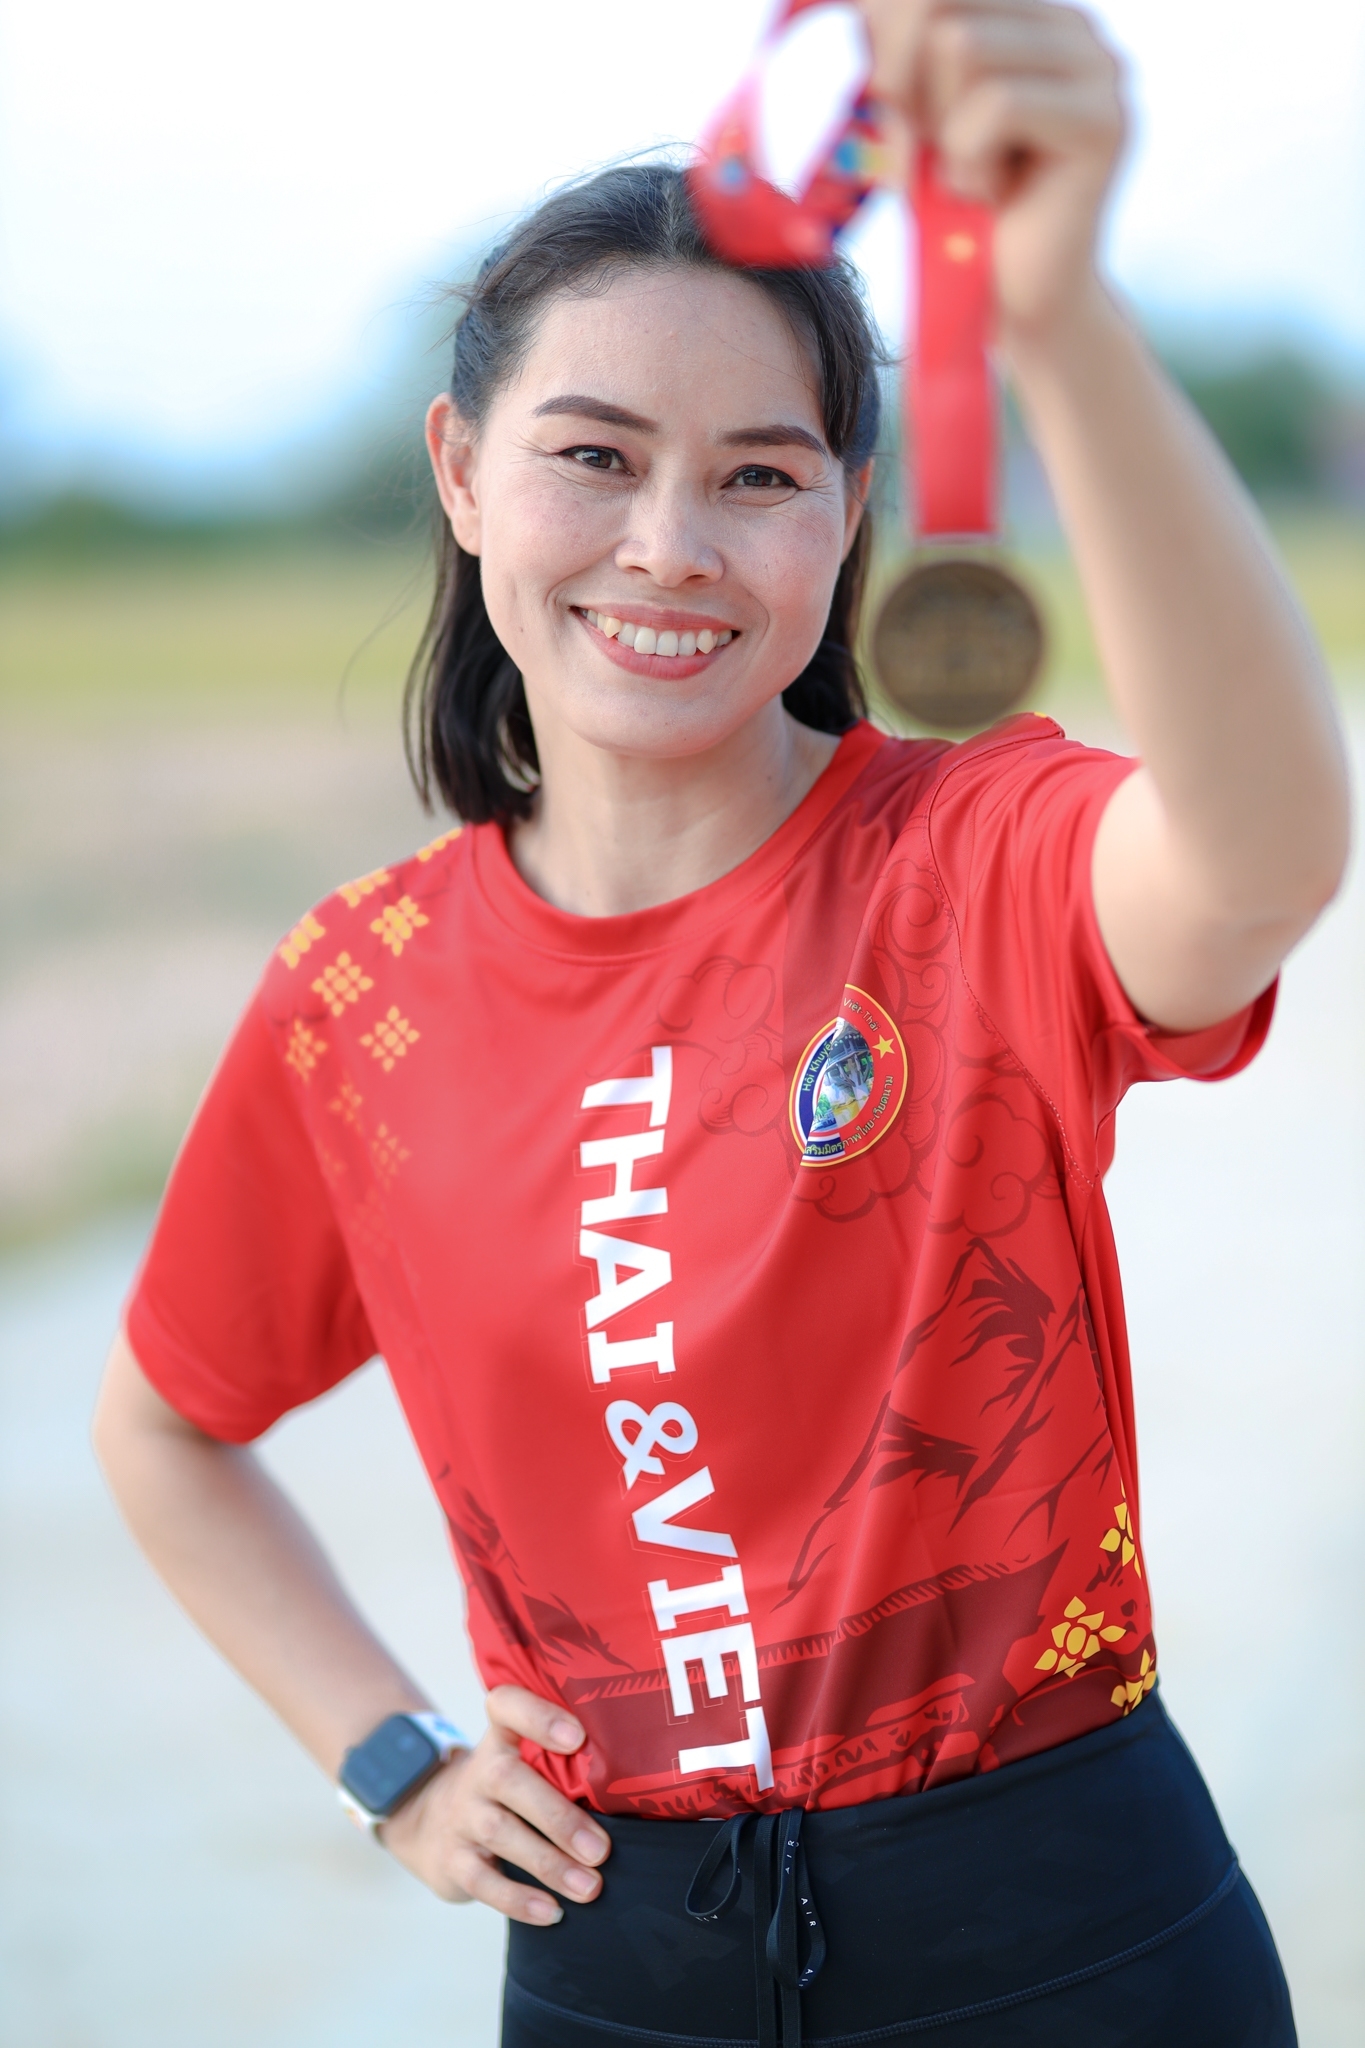 Thai-Vietnamese Cemetery Association & Khao Sam Lan 1st Half-Marathon